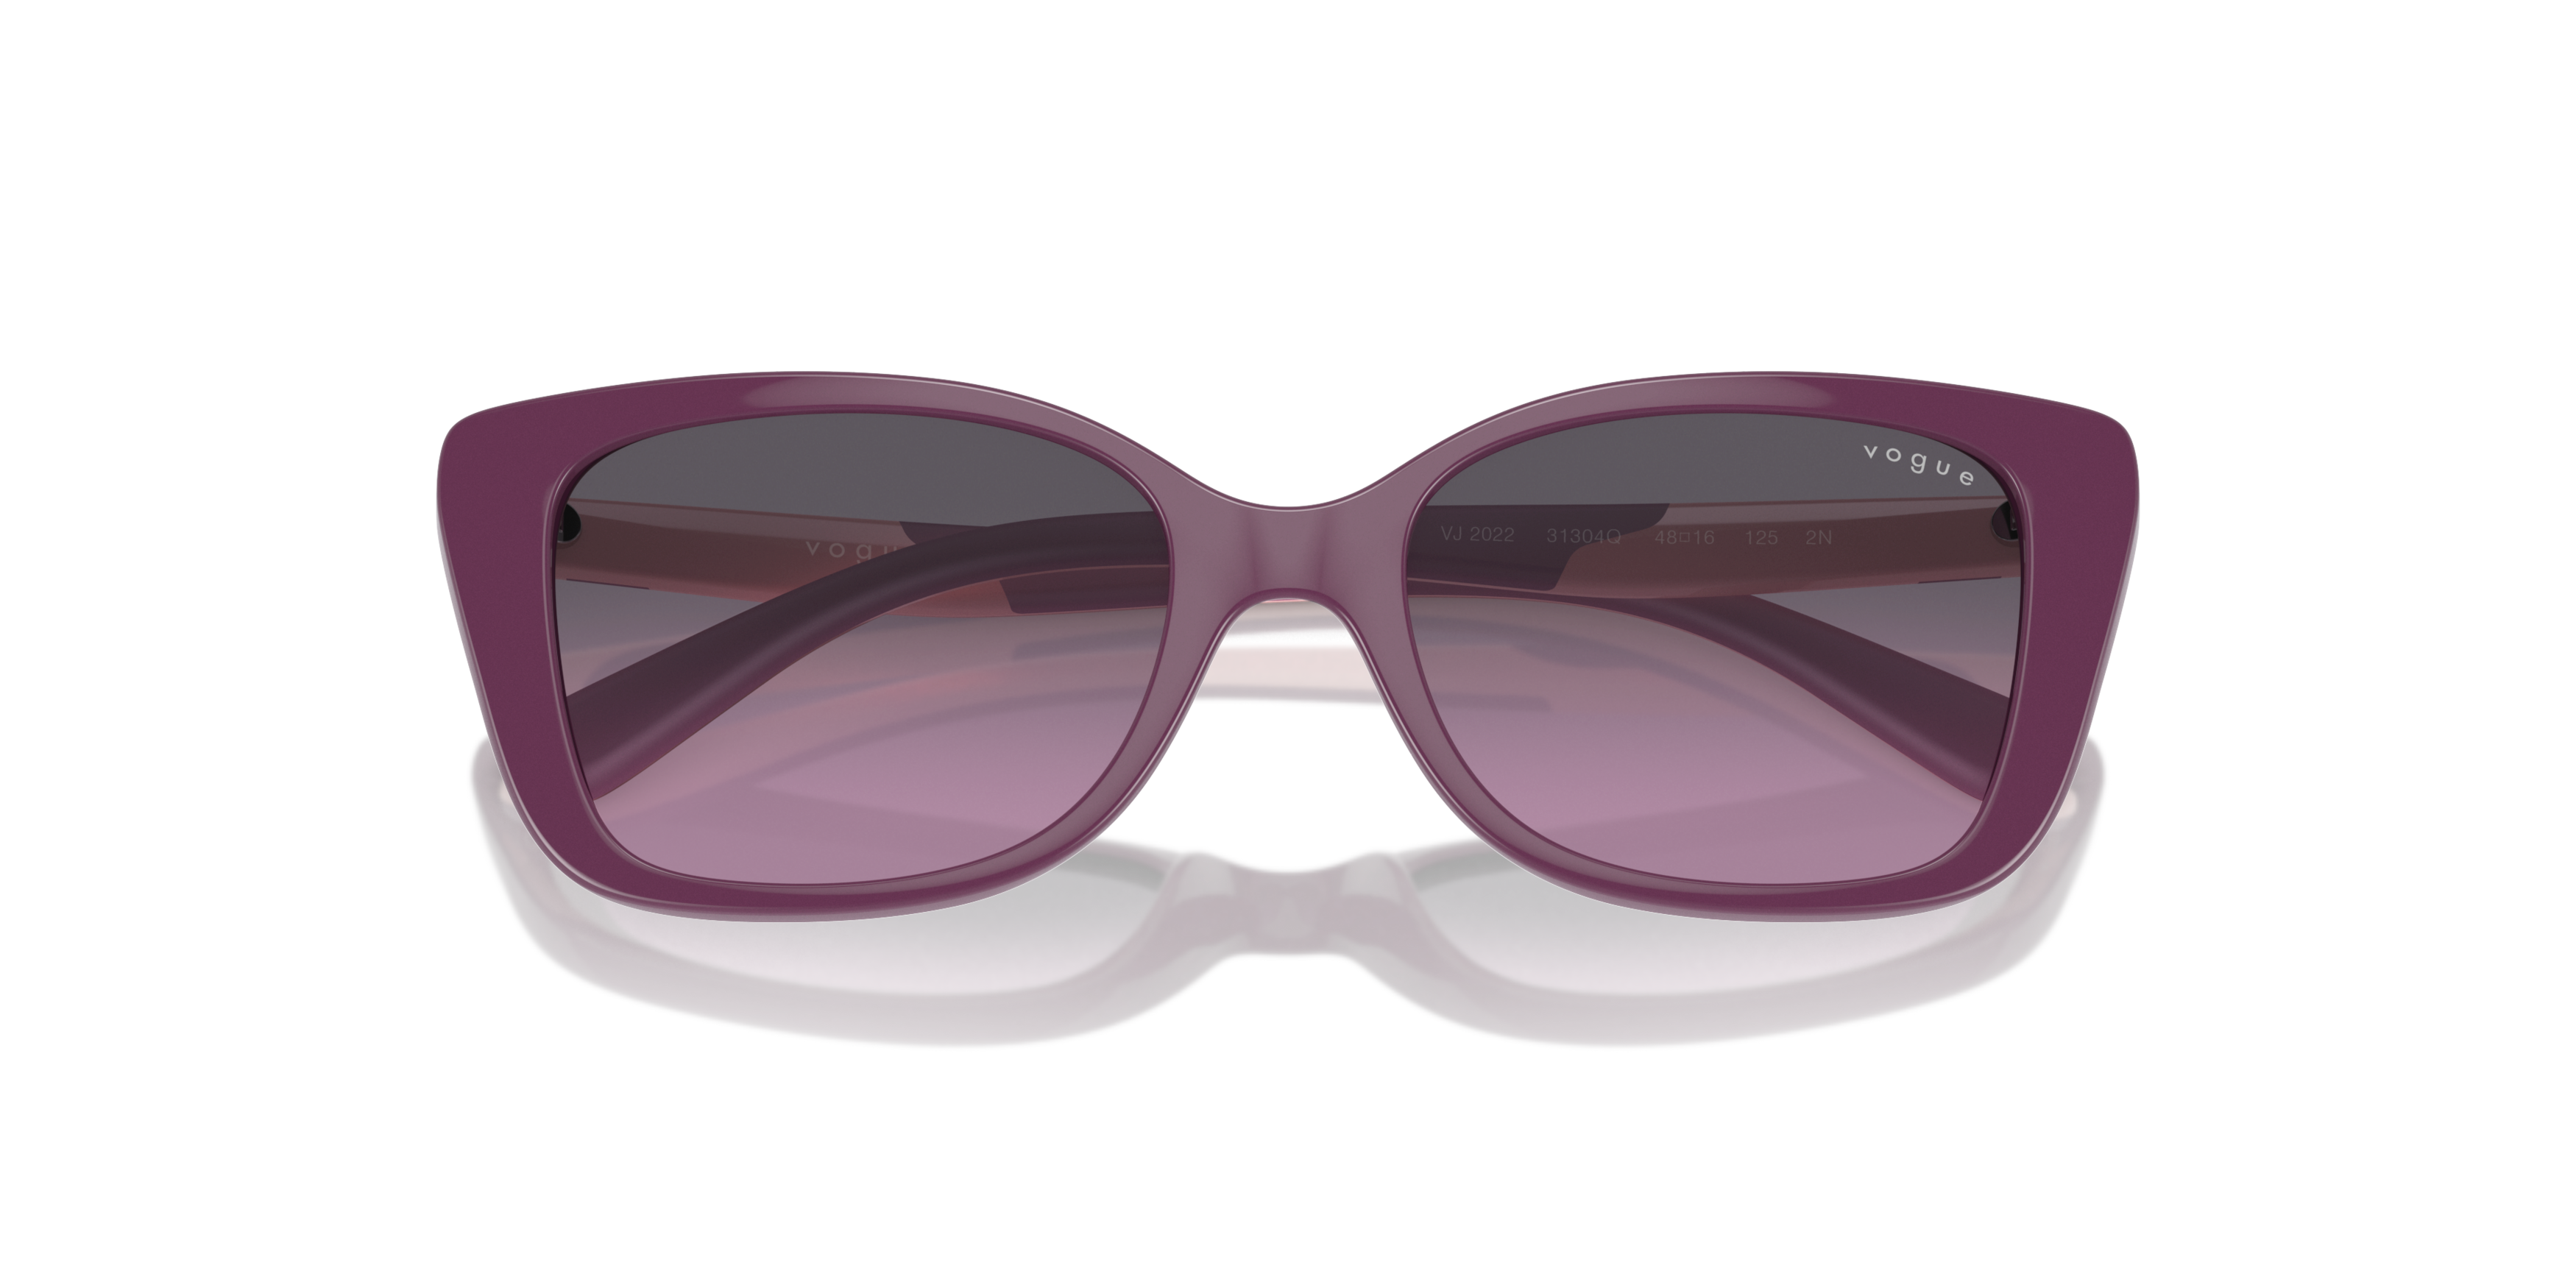 [products.image.folded] Vogue VJ2022 Children's Sunglasses